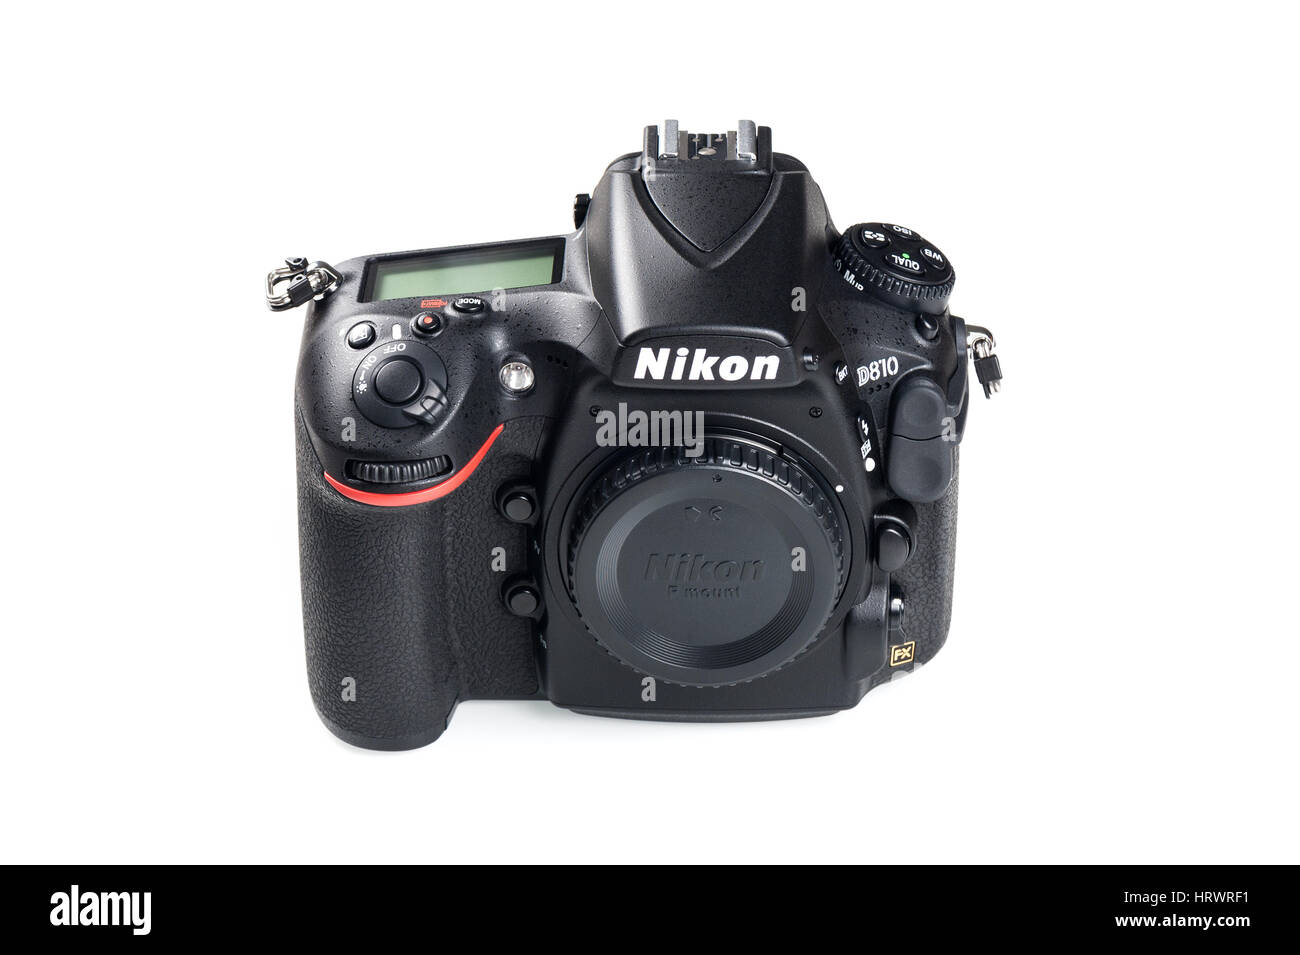 Nikon camera thailand hi-res stock photography and images - Alamy